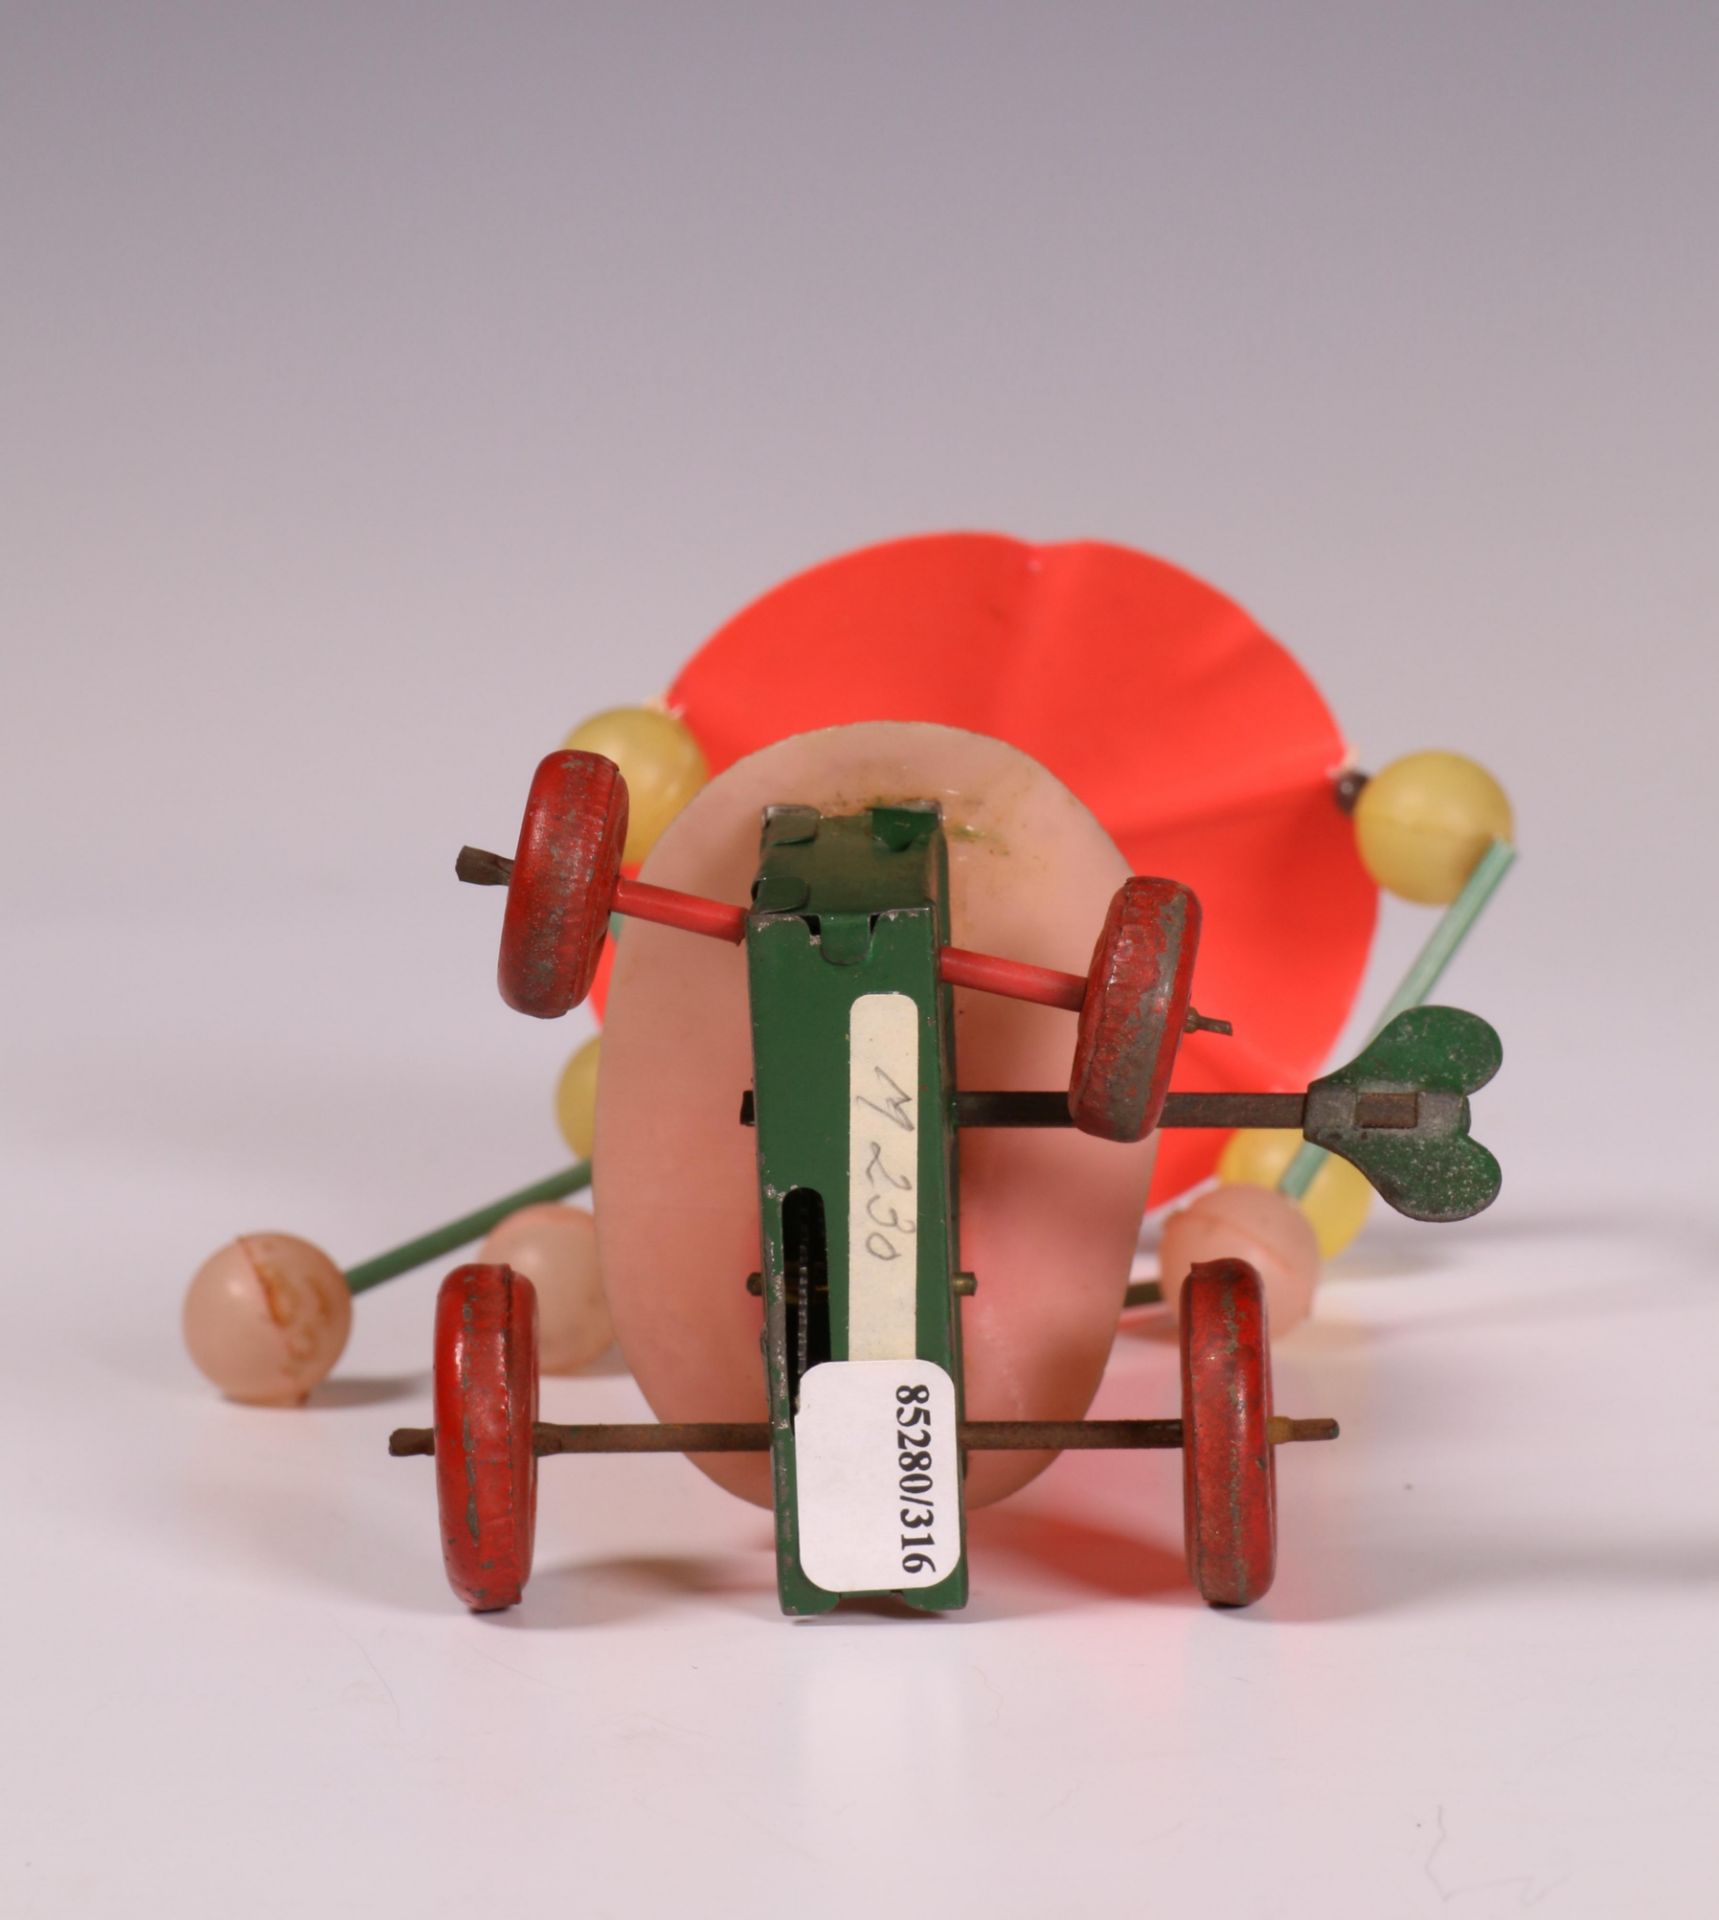 Japan, vier stuks celluloid speelgoed, ca. 1940-1950. - Image 15 of 19